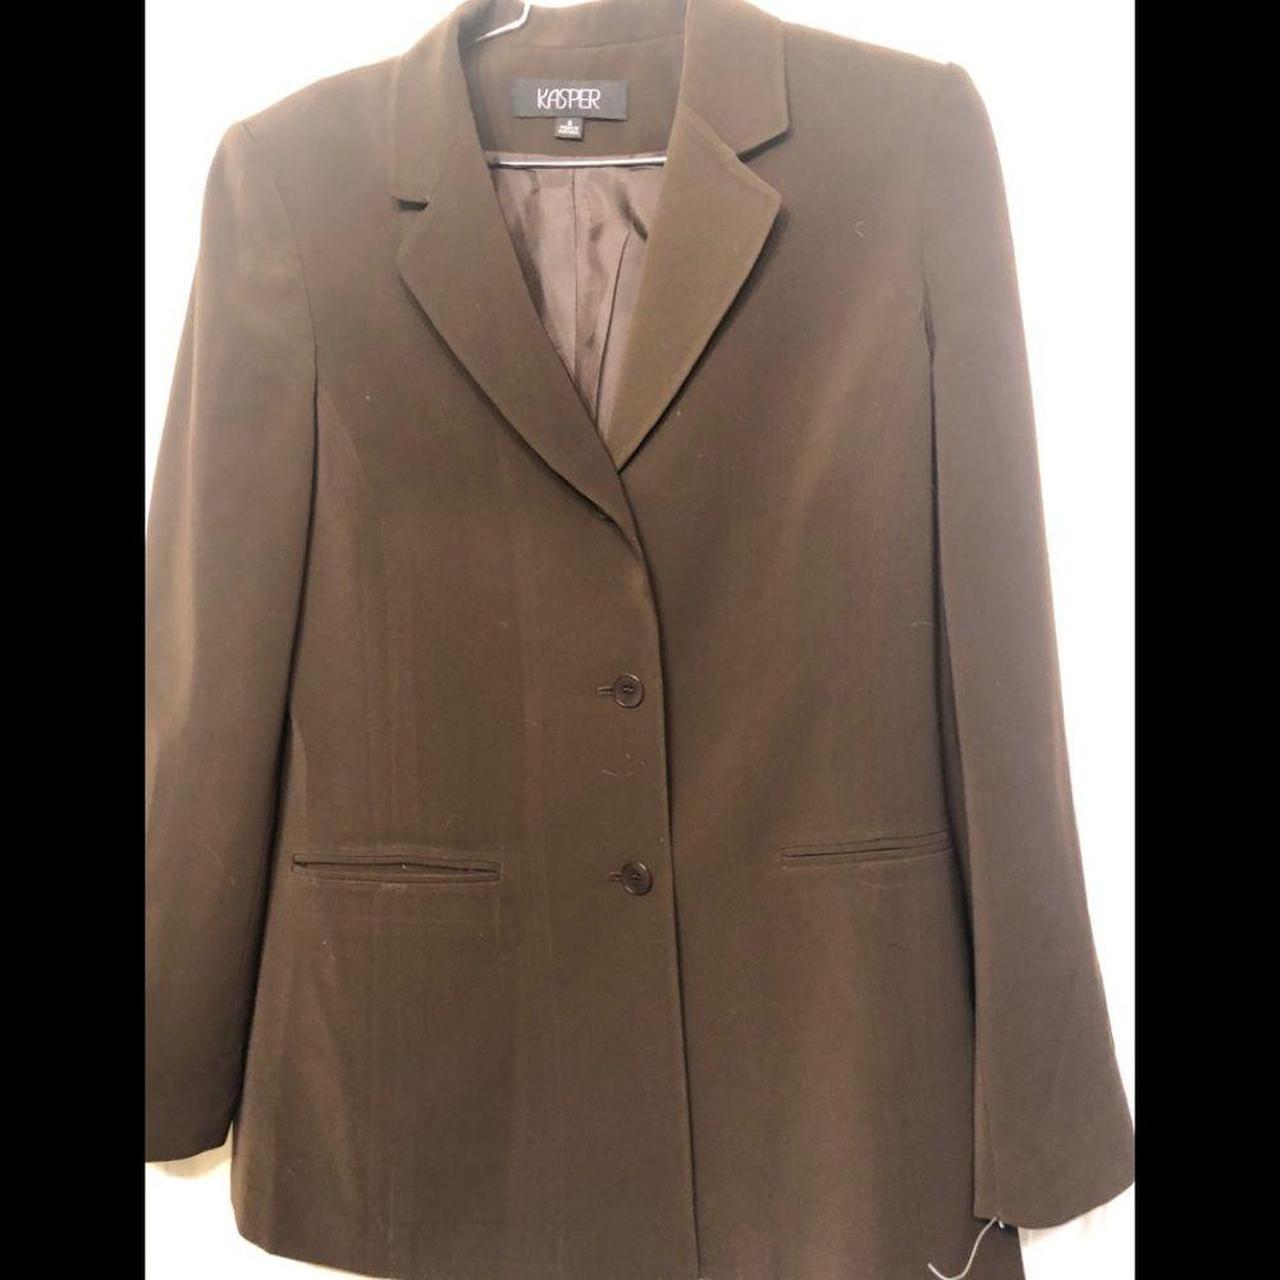 Product Image 1 - Kasper brown blazer classic look